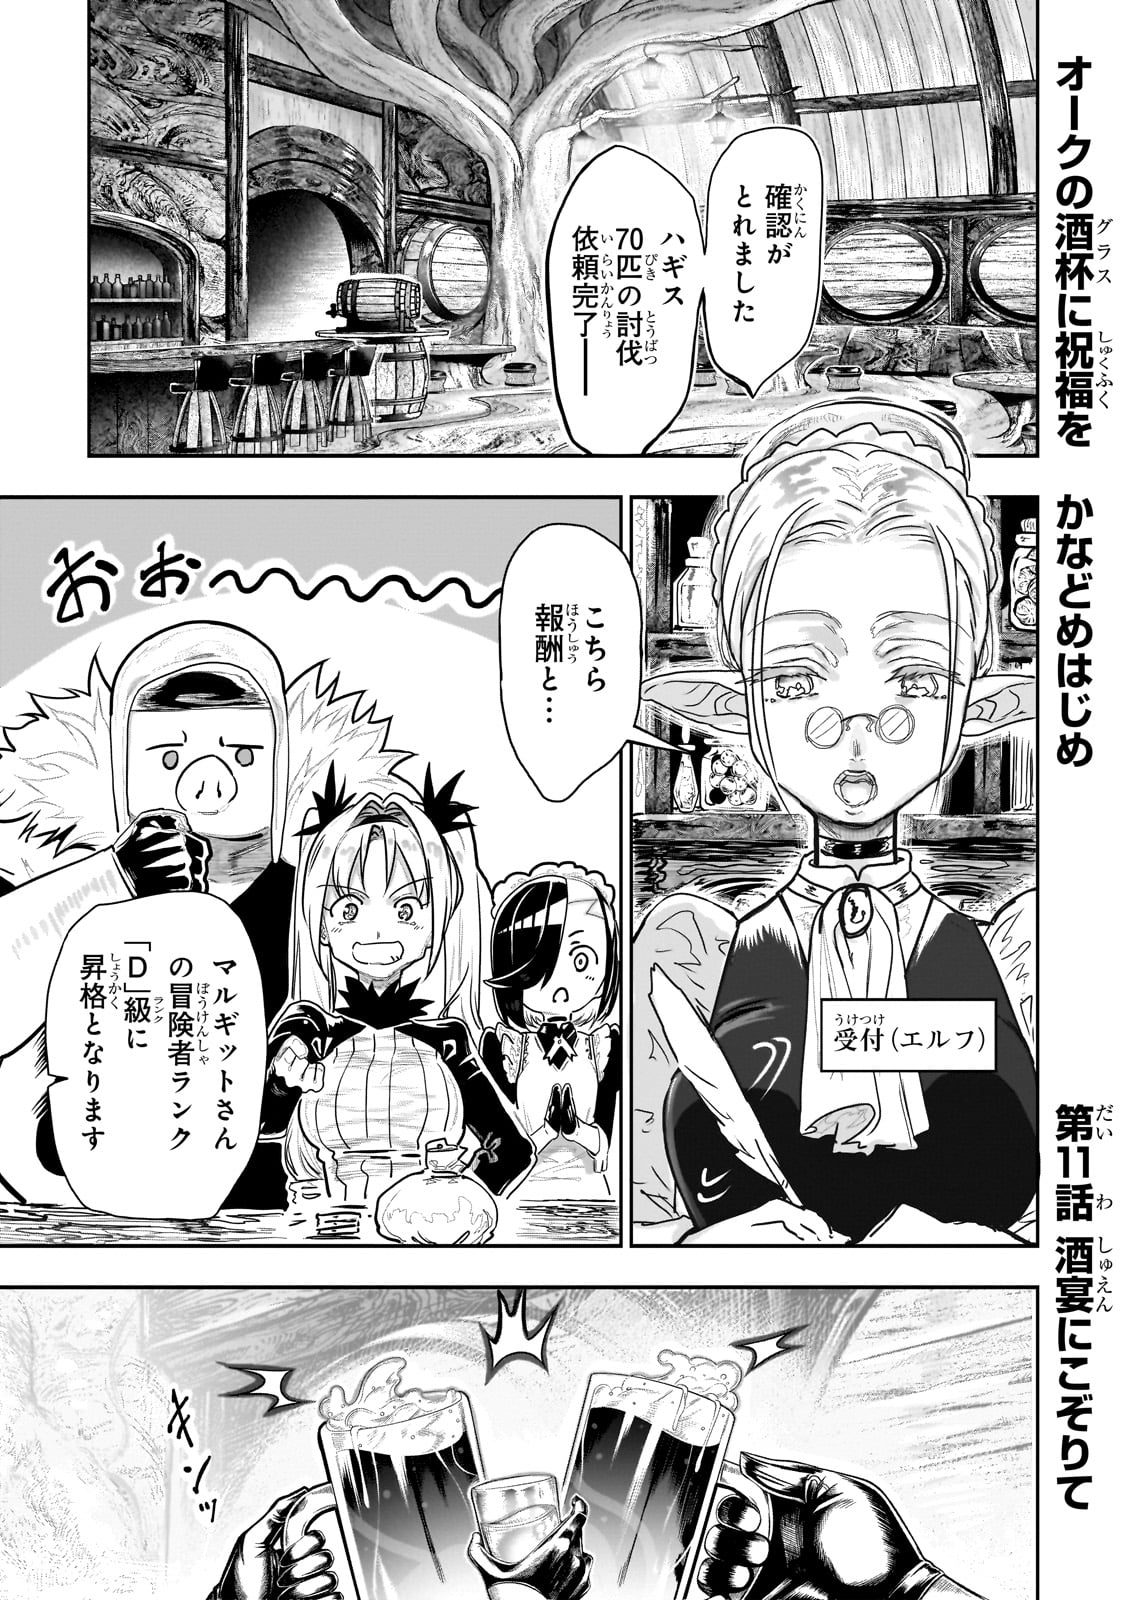 Orc no Shuhai ni Shukufuku wo - Chapter 11 - Page 1